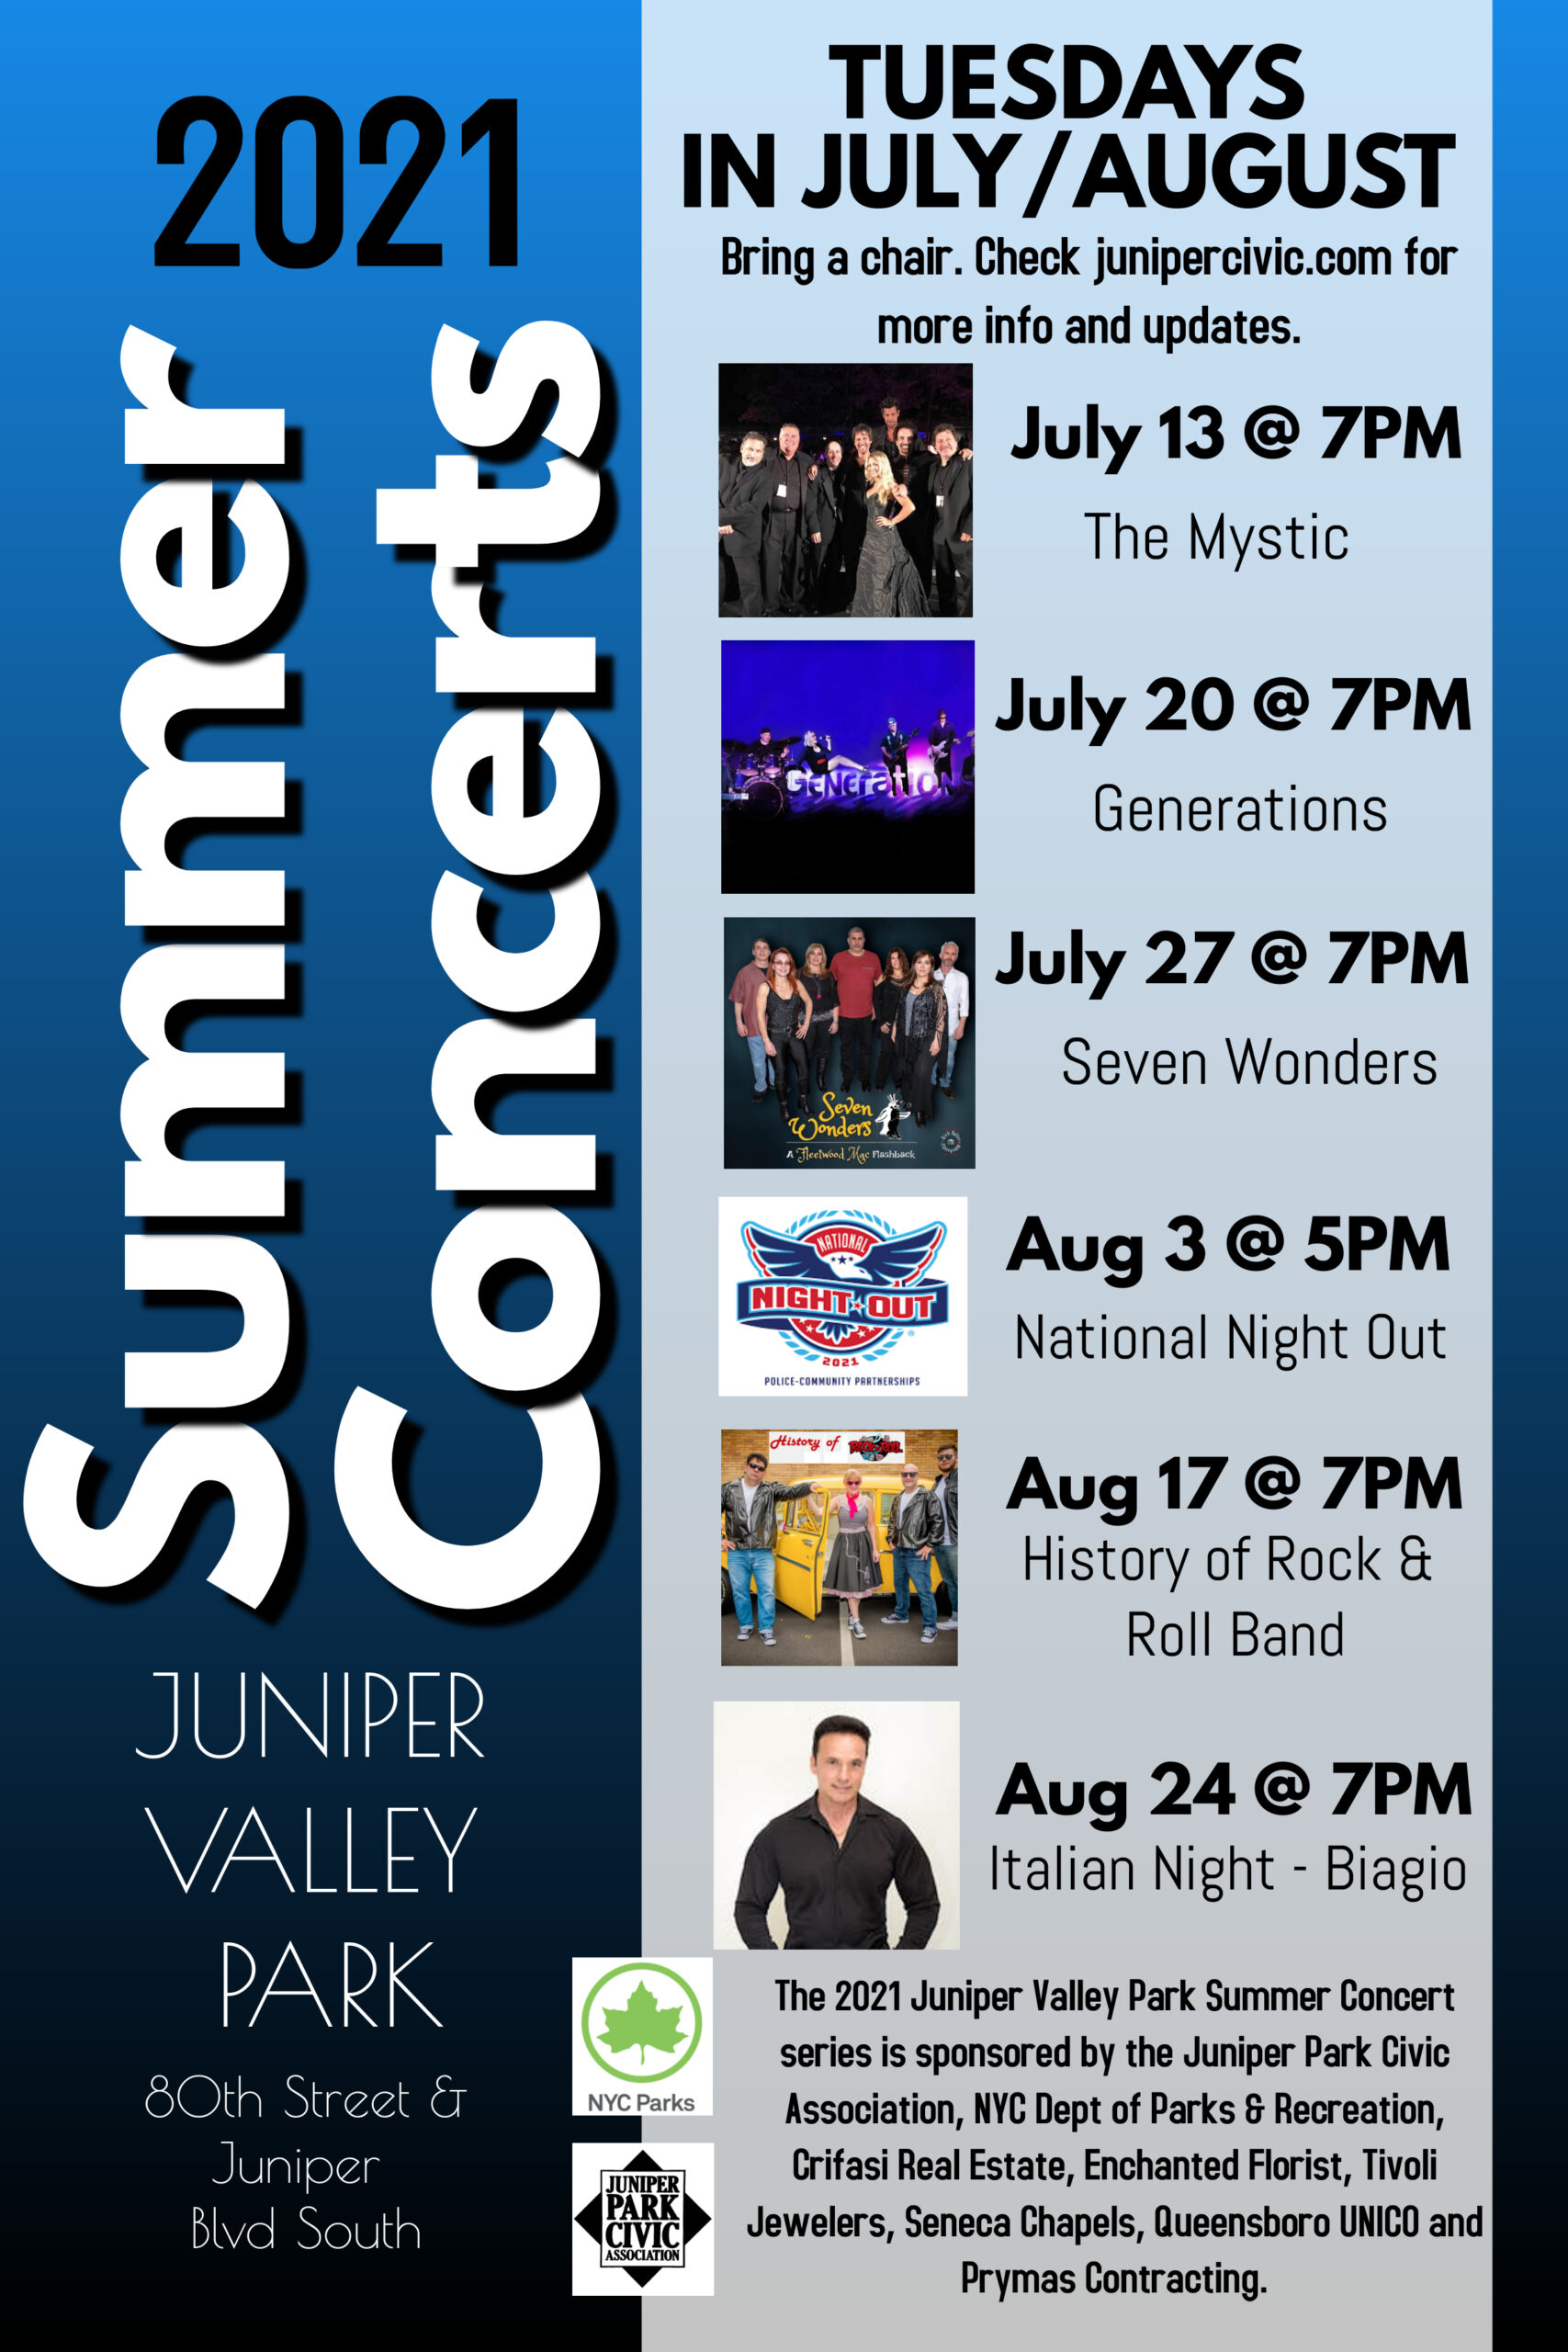 JPCA presents the 2021 Summer Concert Series